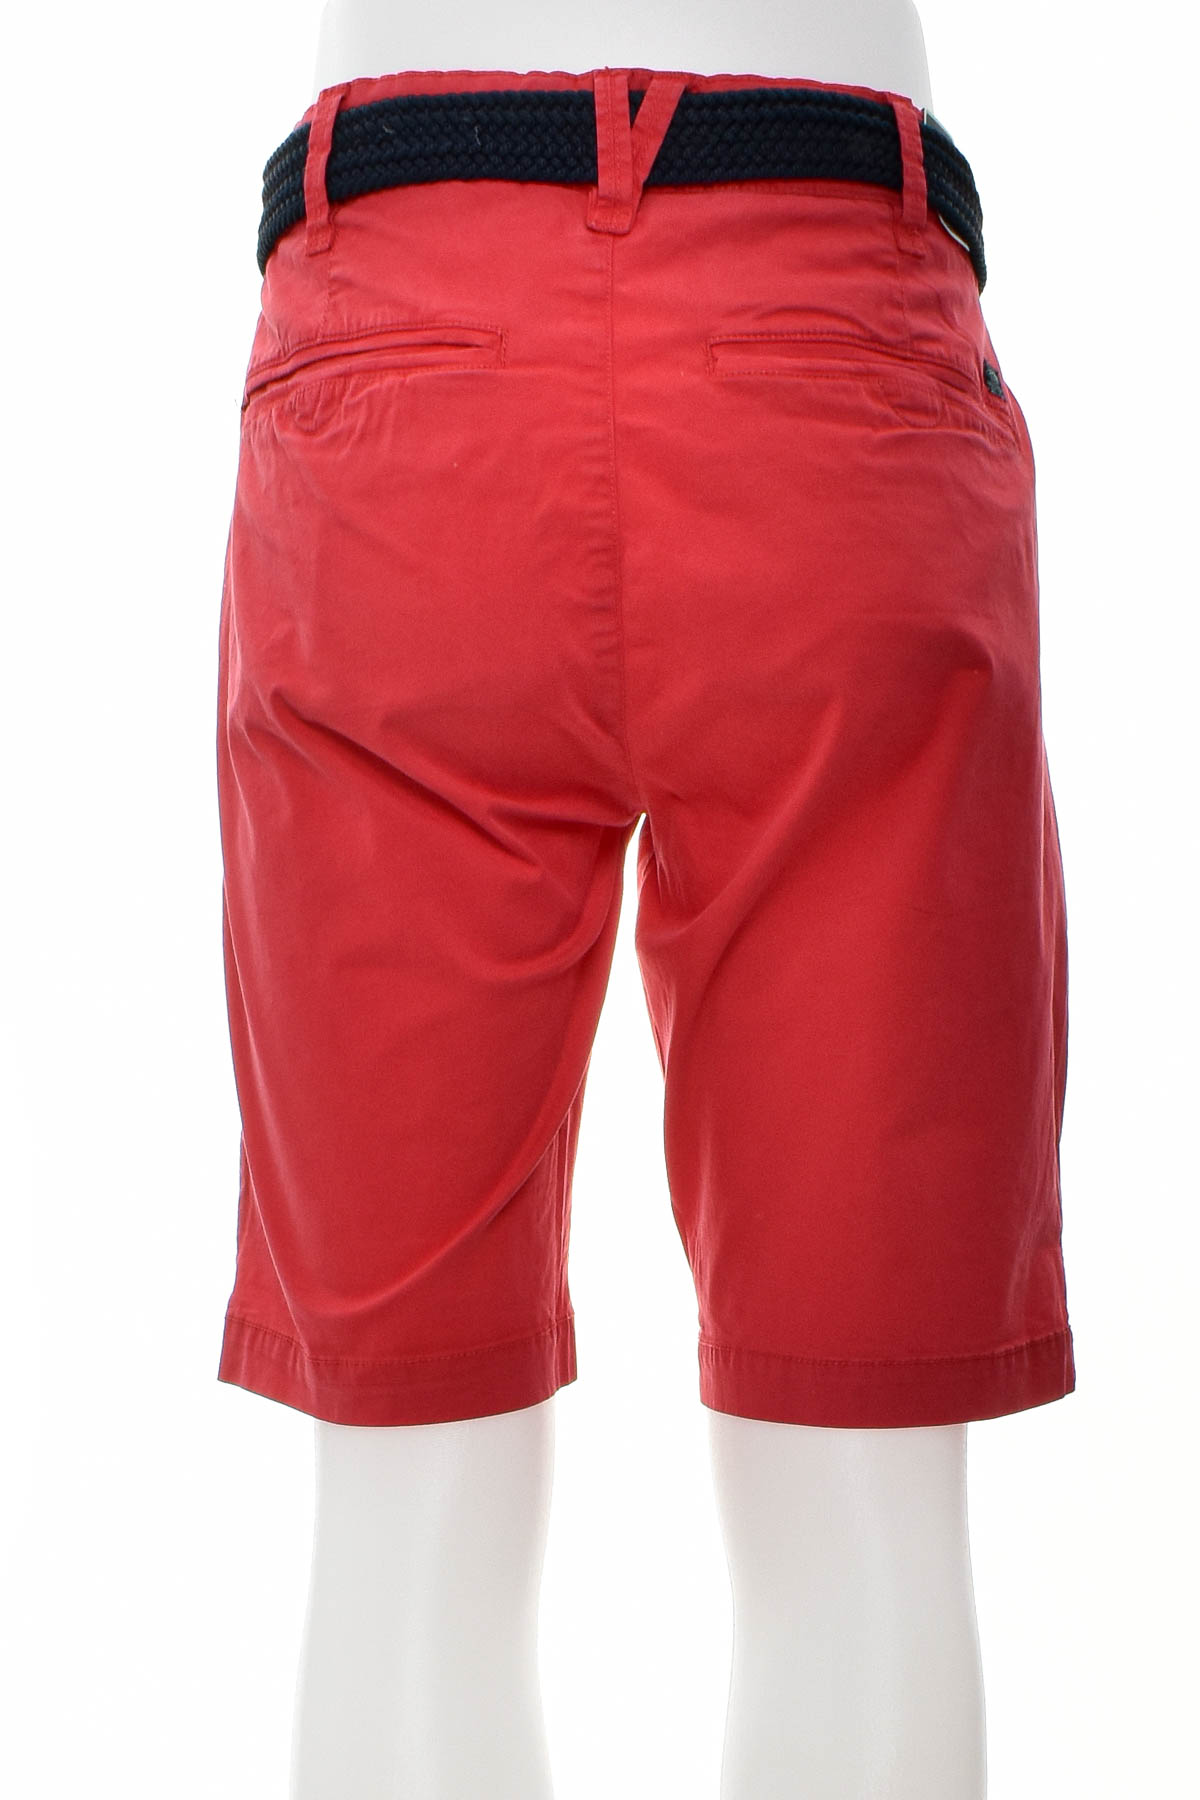 Men's shorts - Petrol Industries Co - 1